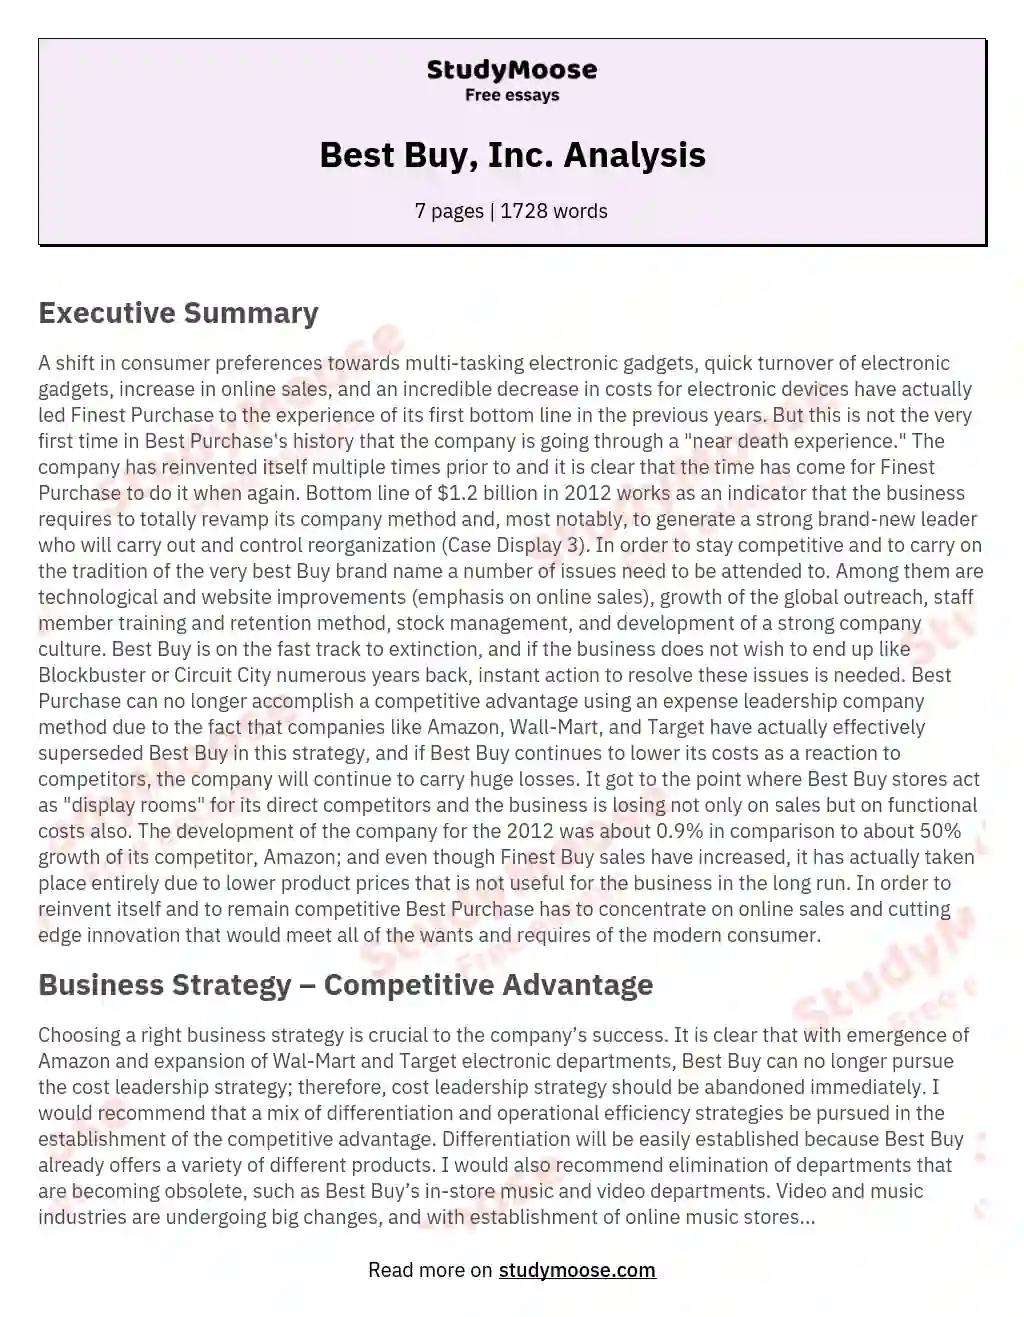 Best Buy, Inc. Analysis essay